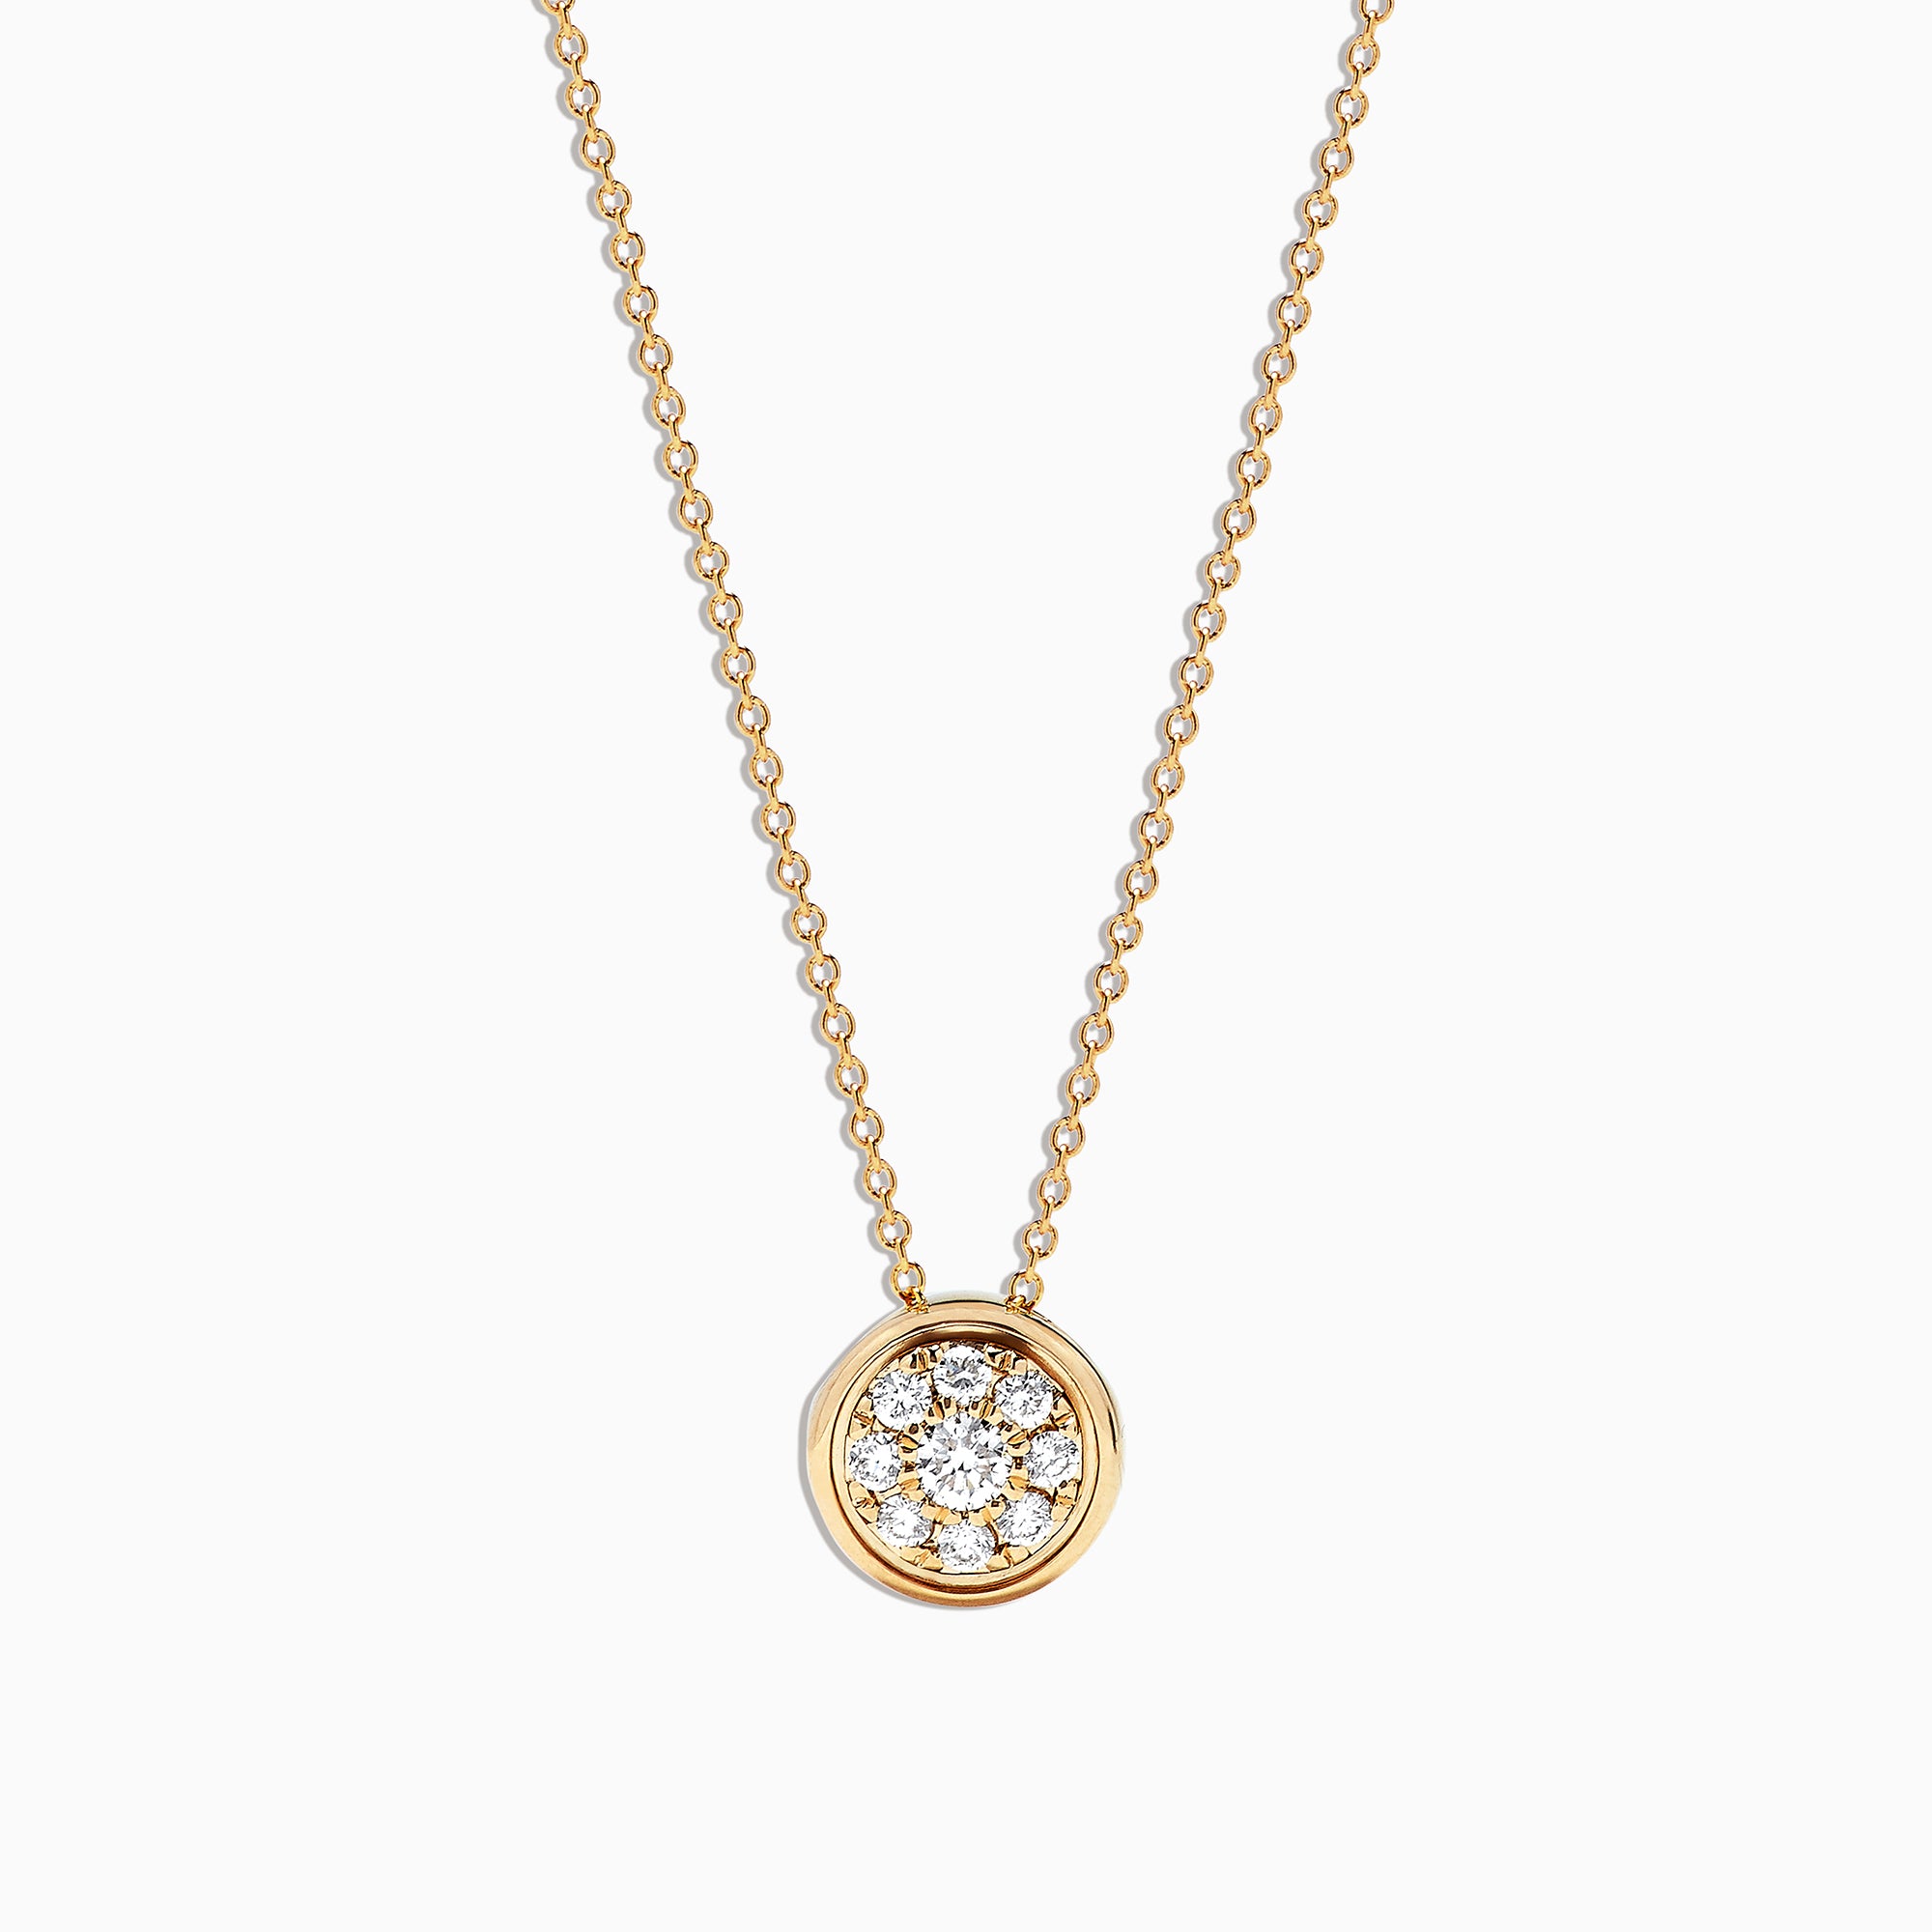 Effy D'Oro 14K Yellow Gold Diamond Necklace, 0.31 TCW